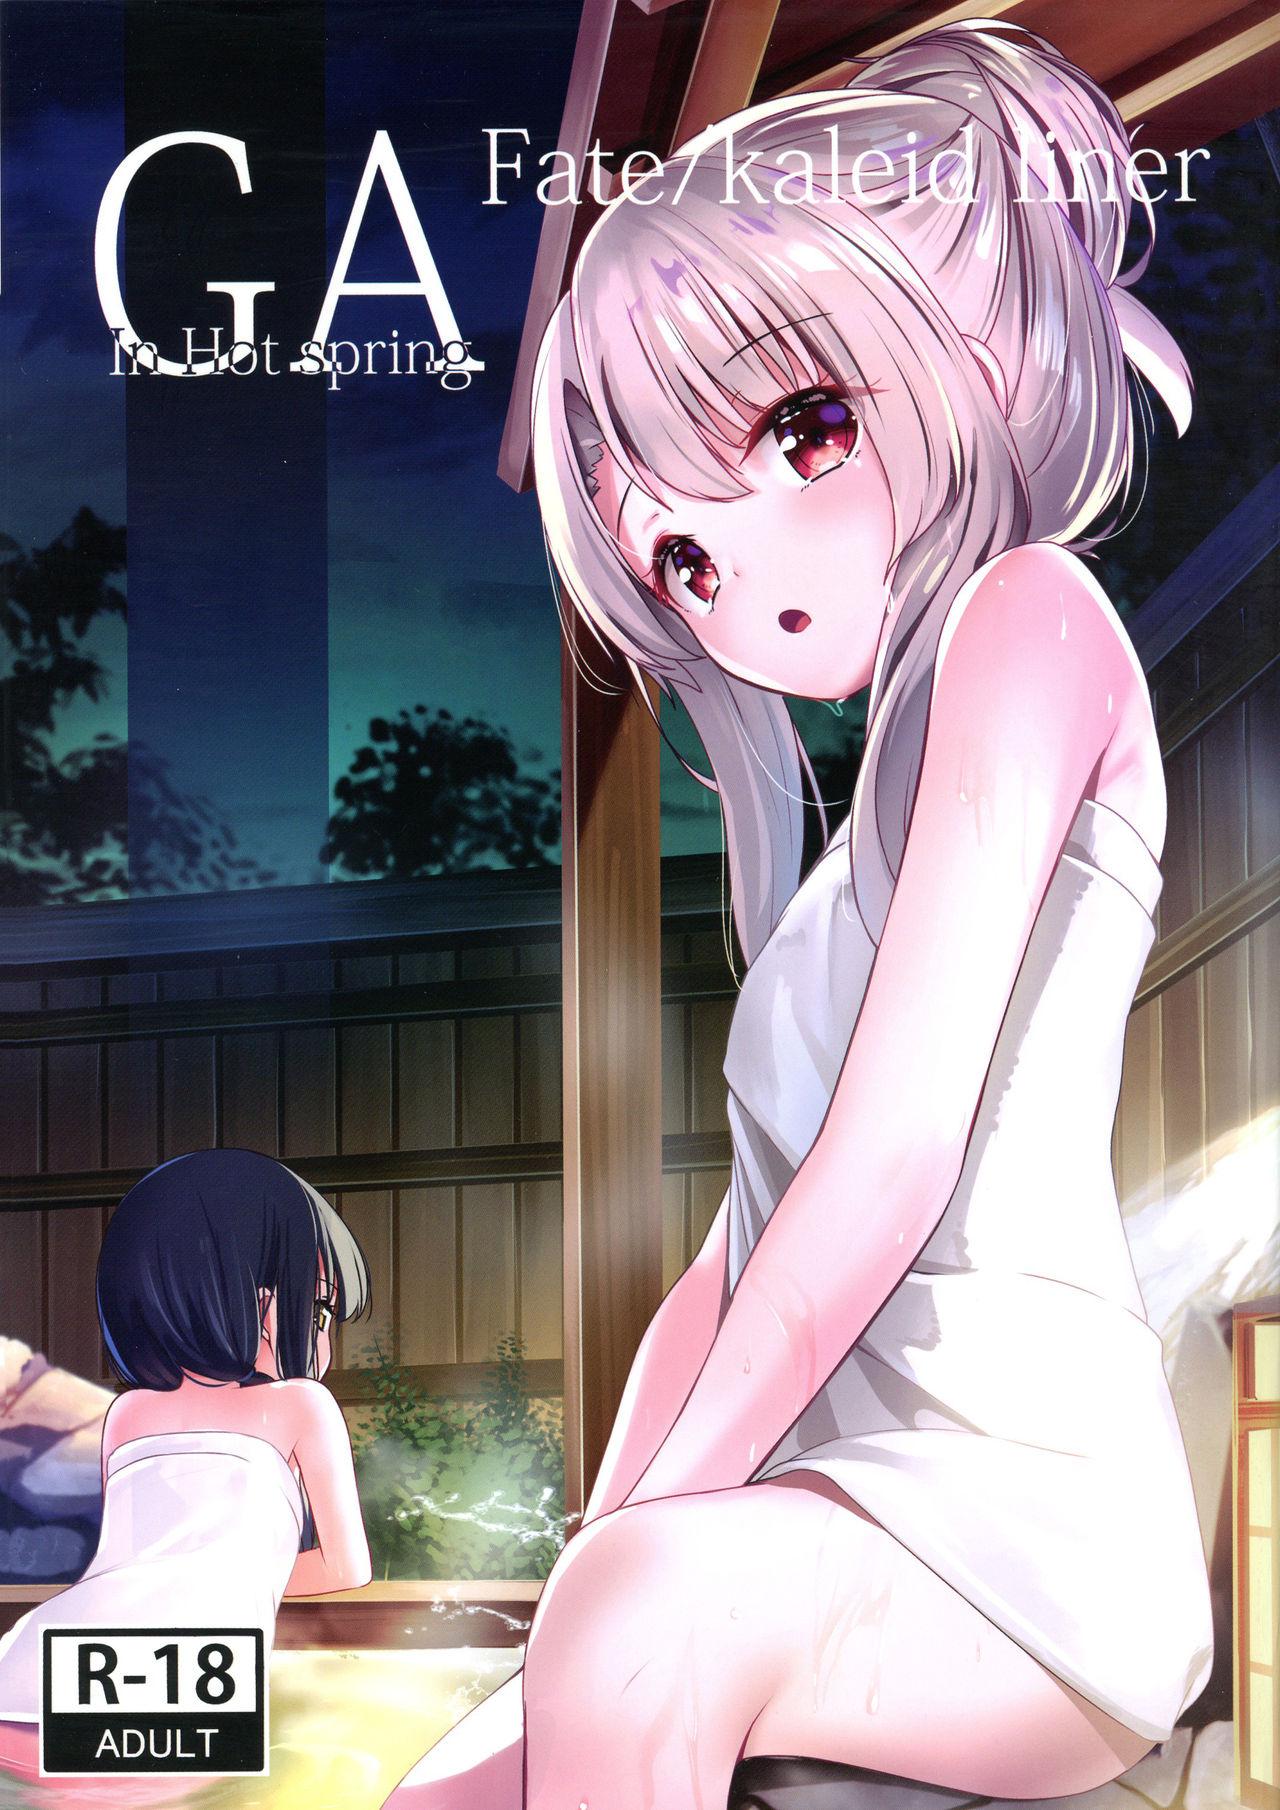 GA Fate/kaleid liner In Hot spring 0